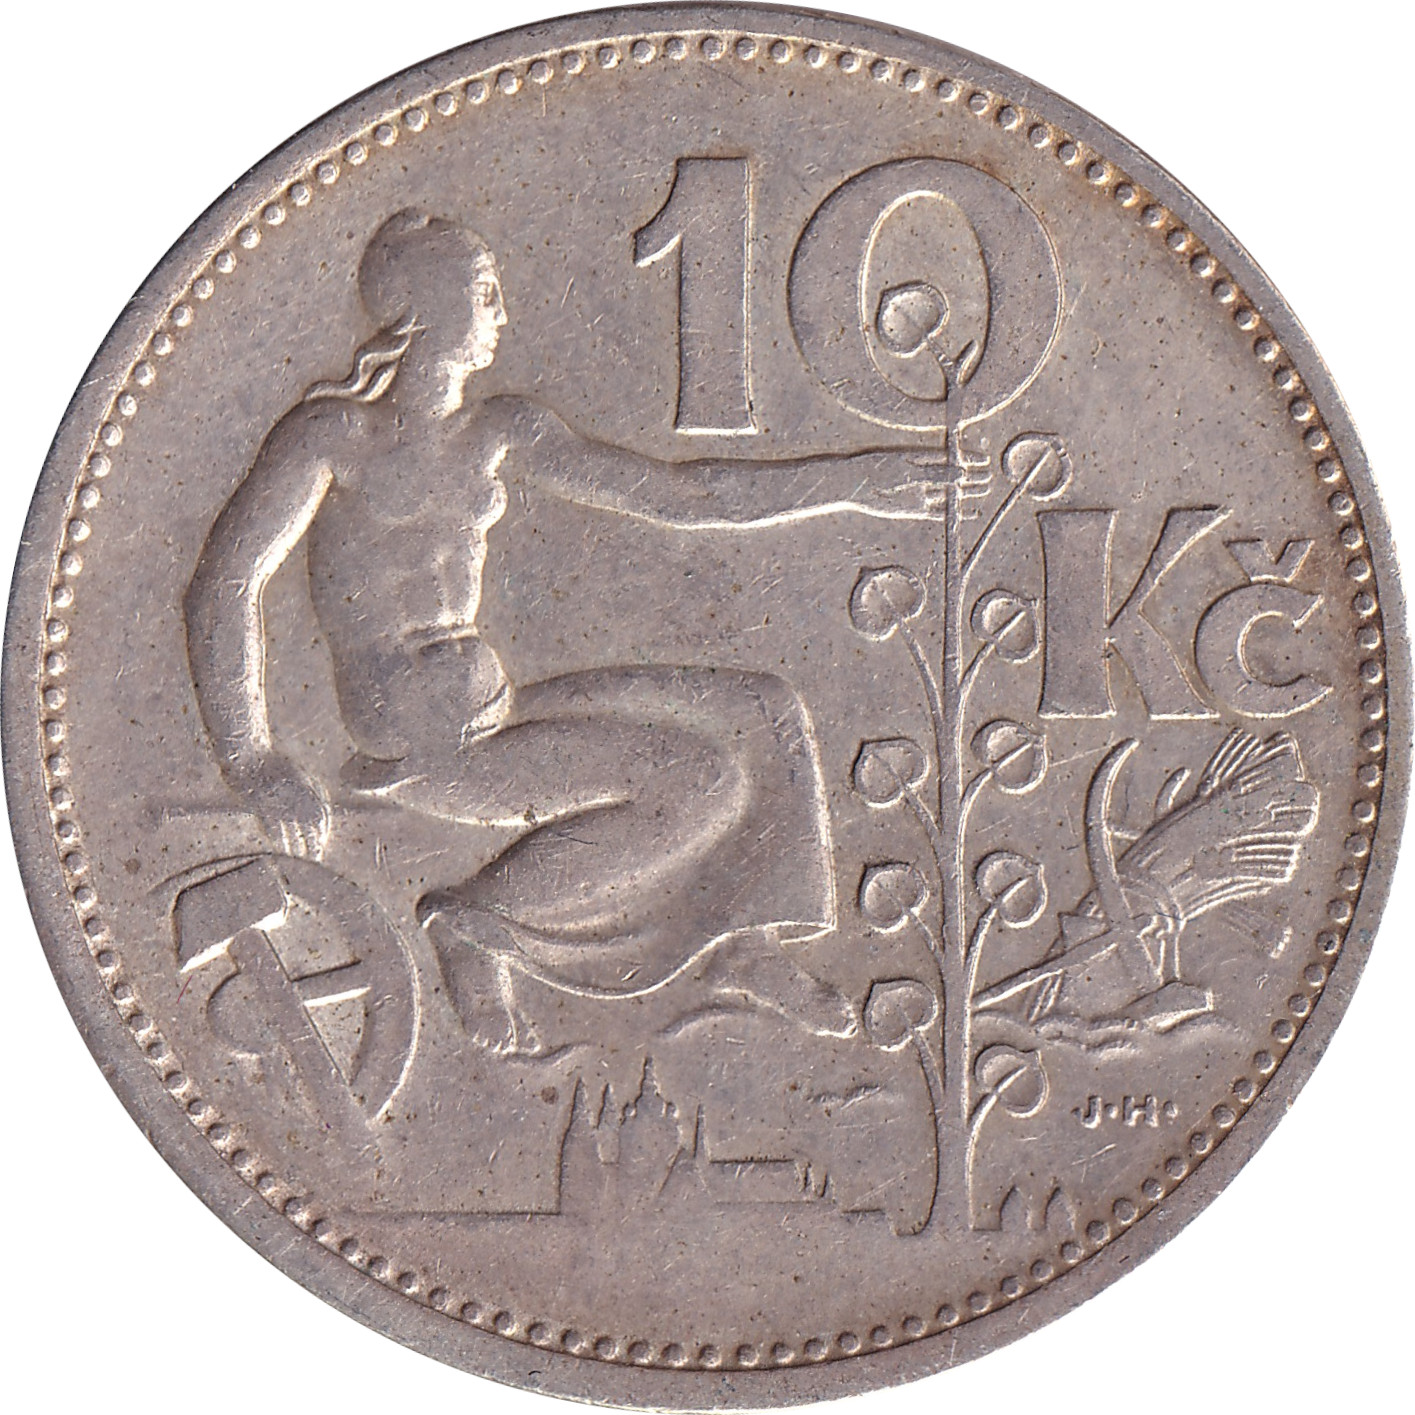 10 korun - Republic